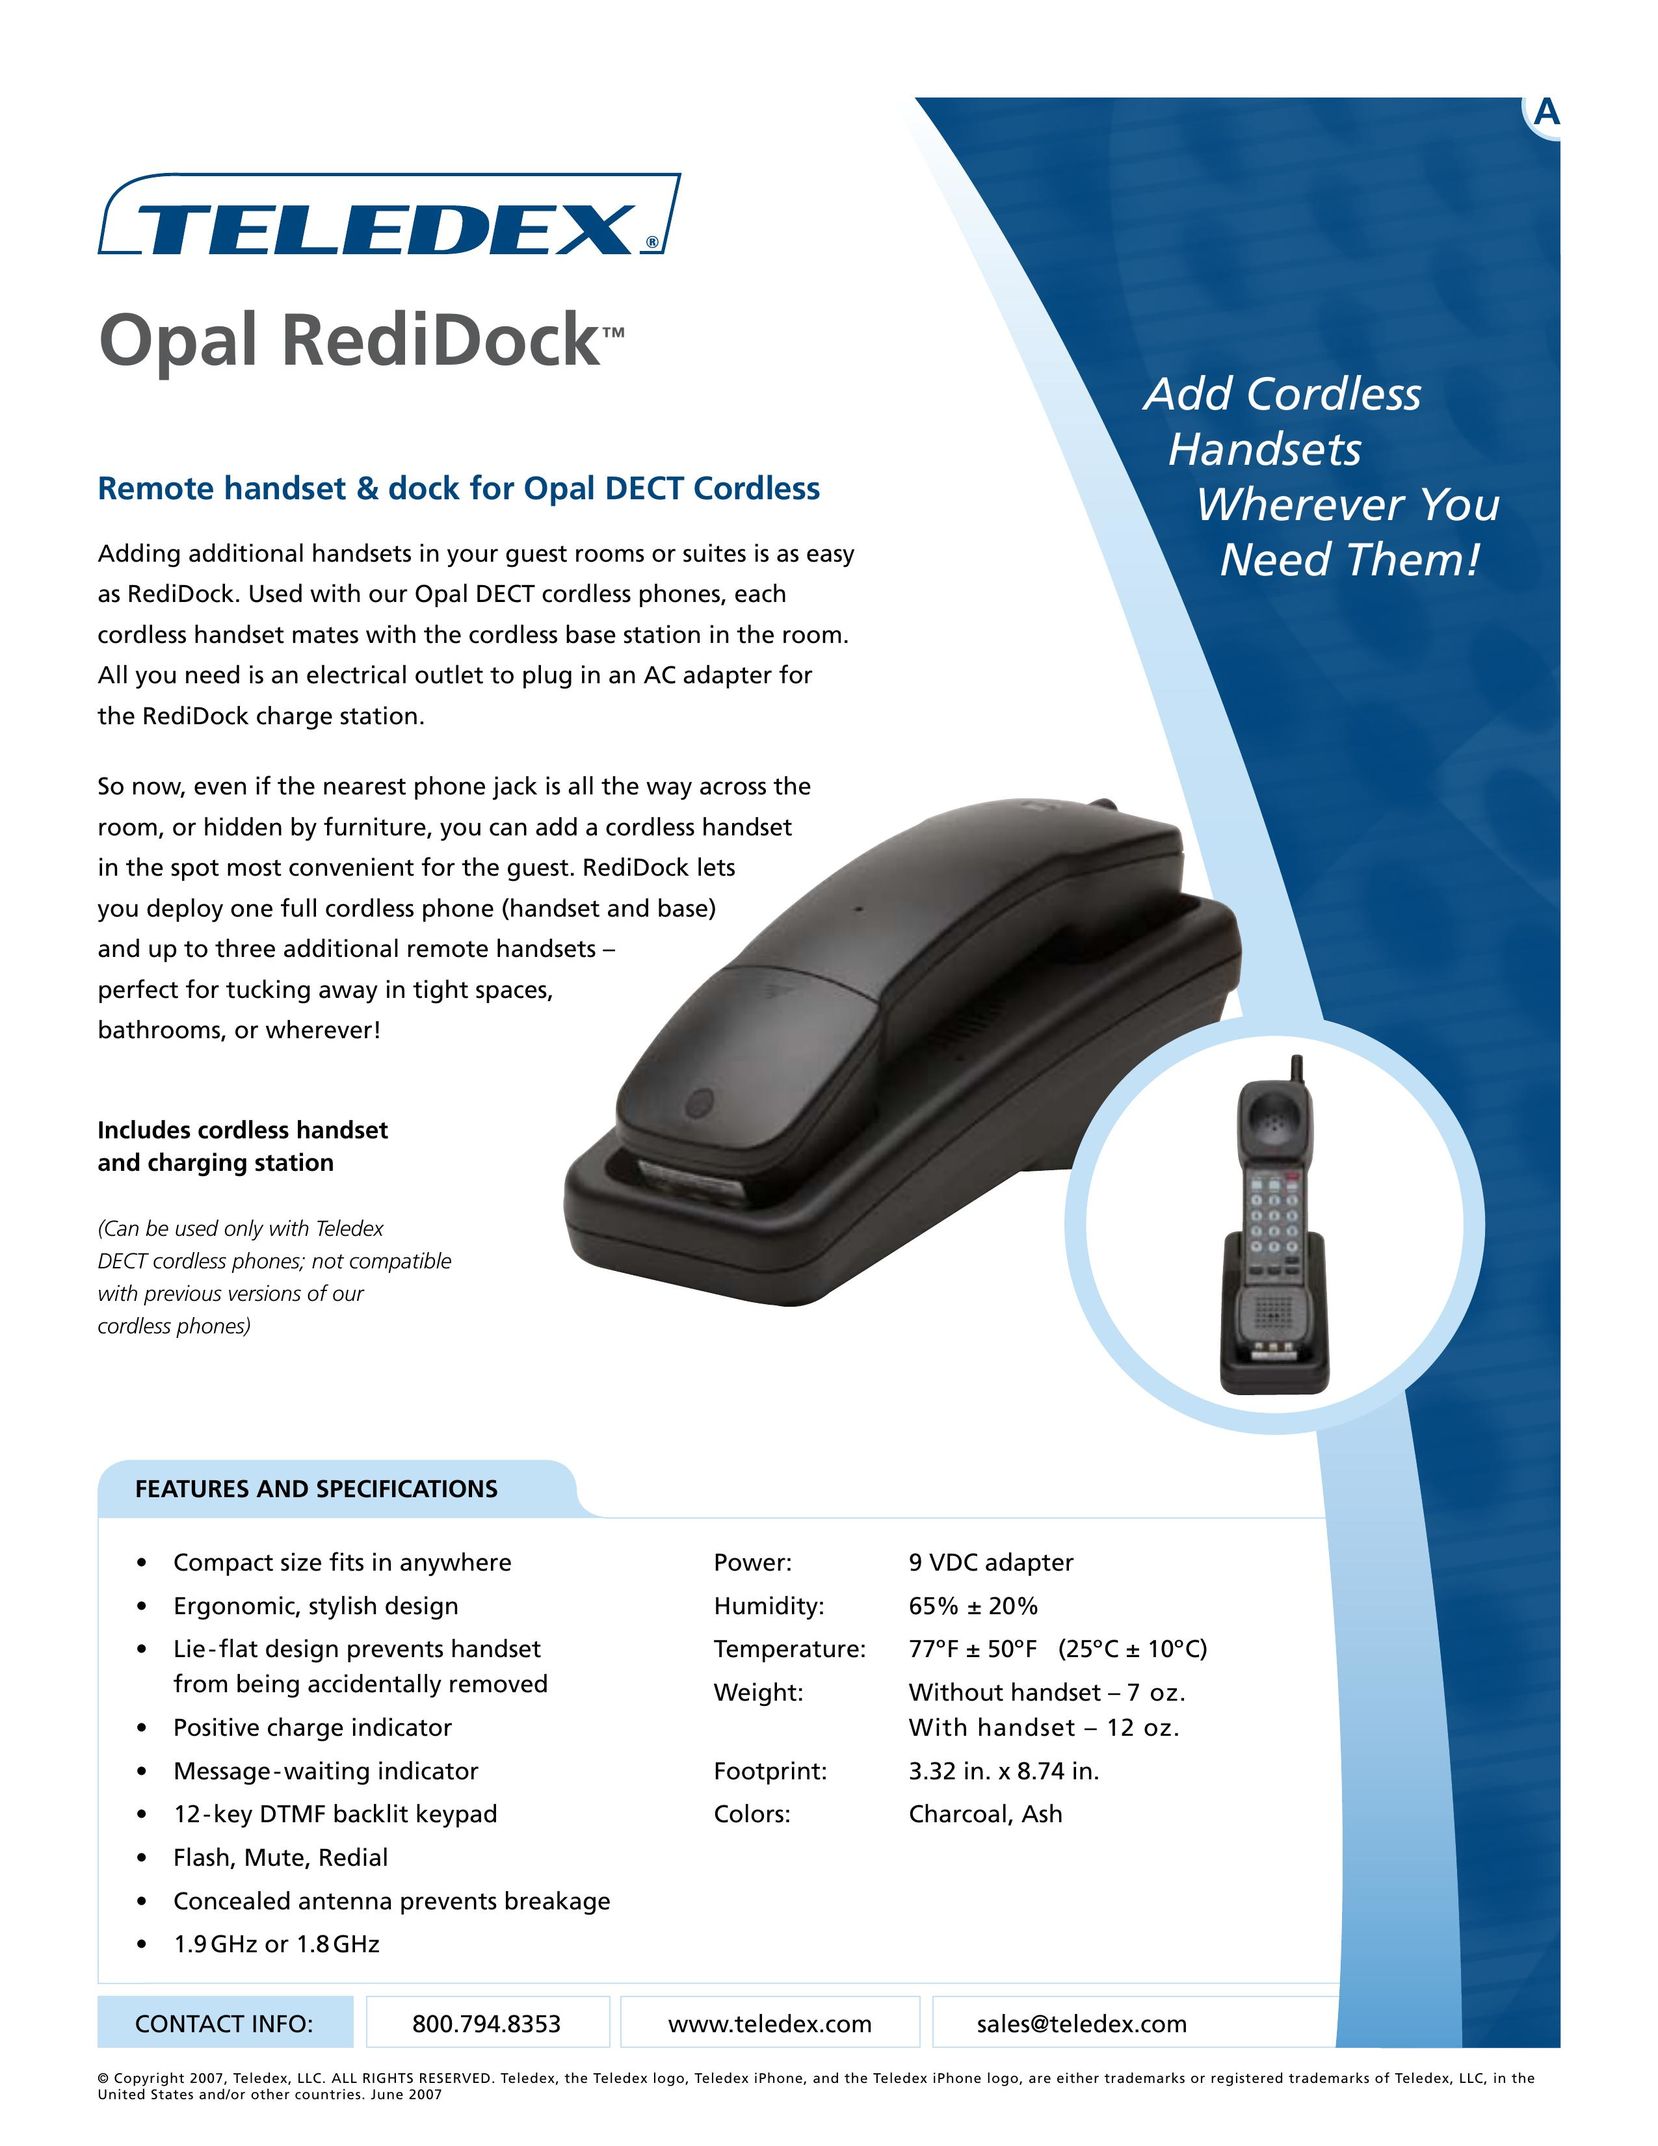 Teledex Opal RediDock Telephone User Manual